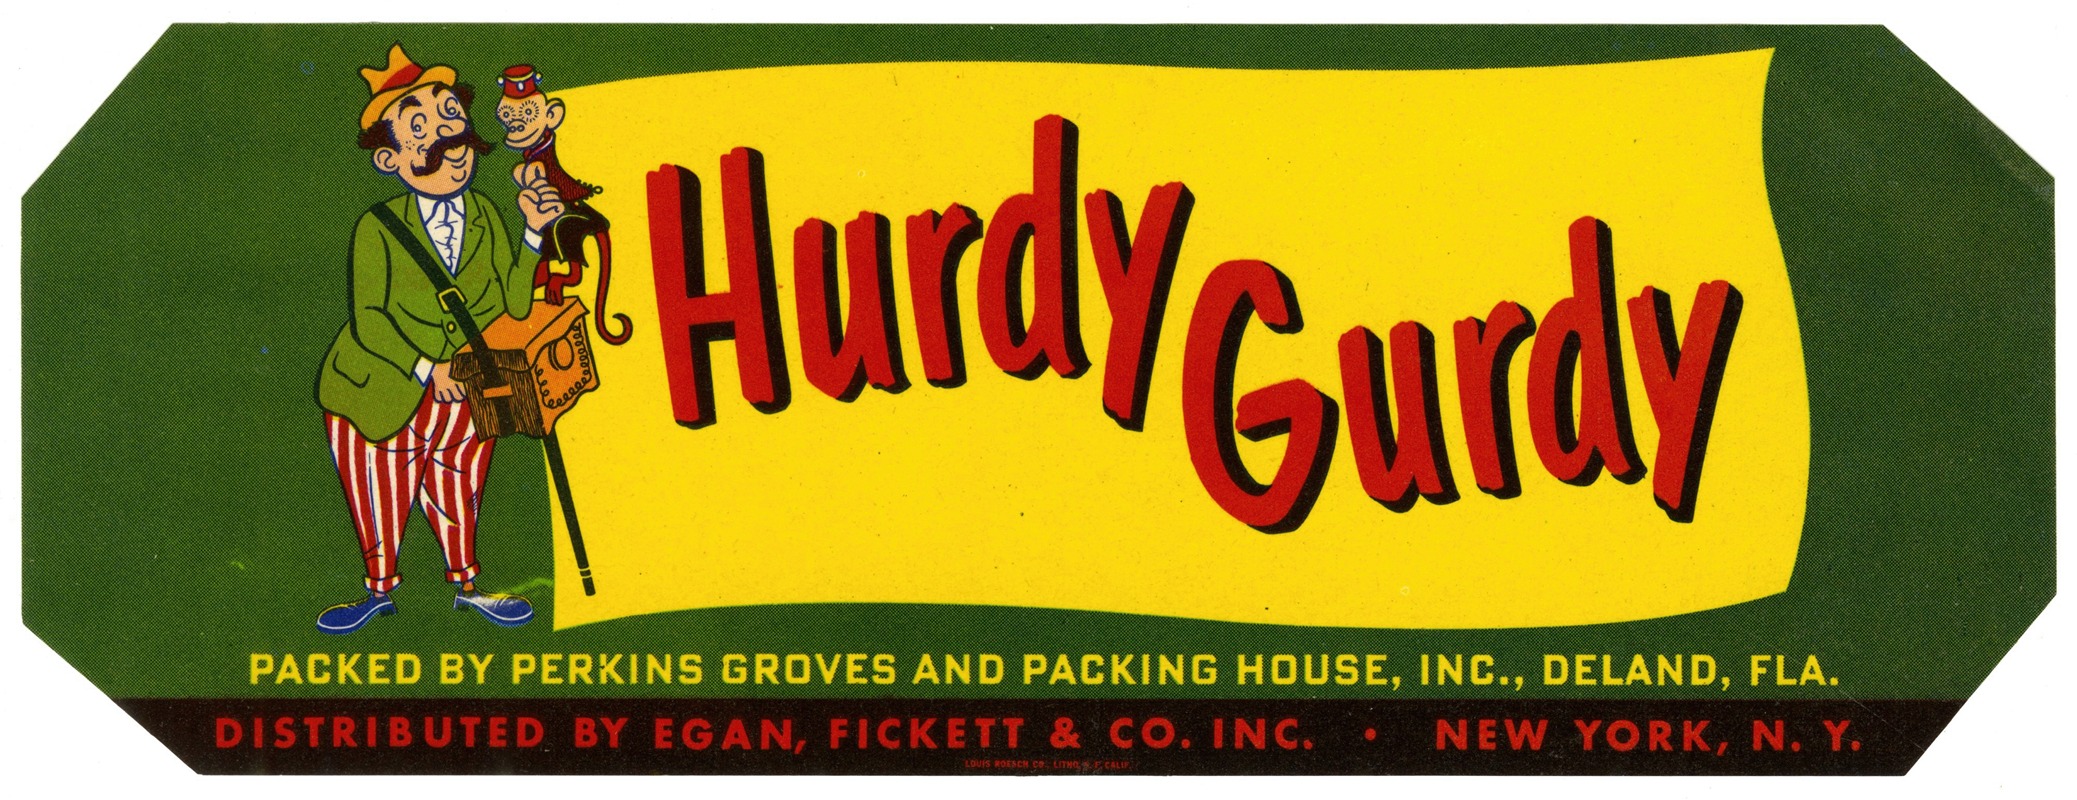 Anonymous - Hurdy Gurdy Produce Label